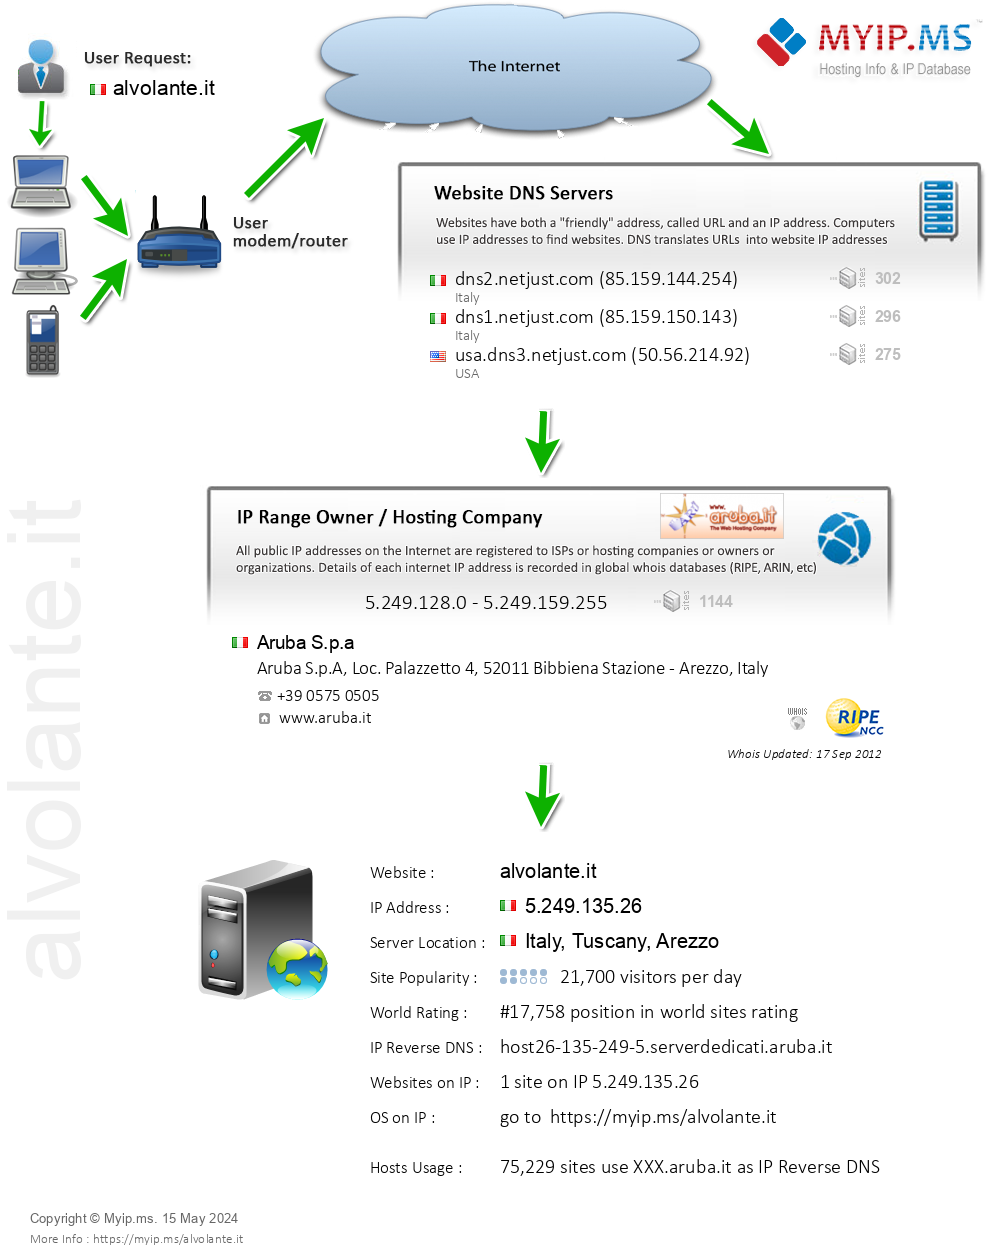 Alvolante.it - Website Hosting Visual IP Diagram